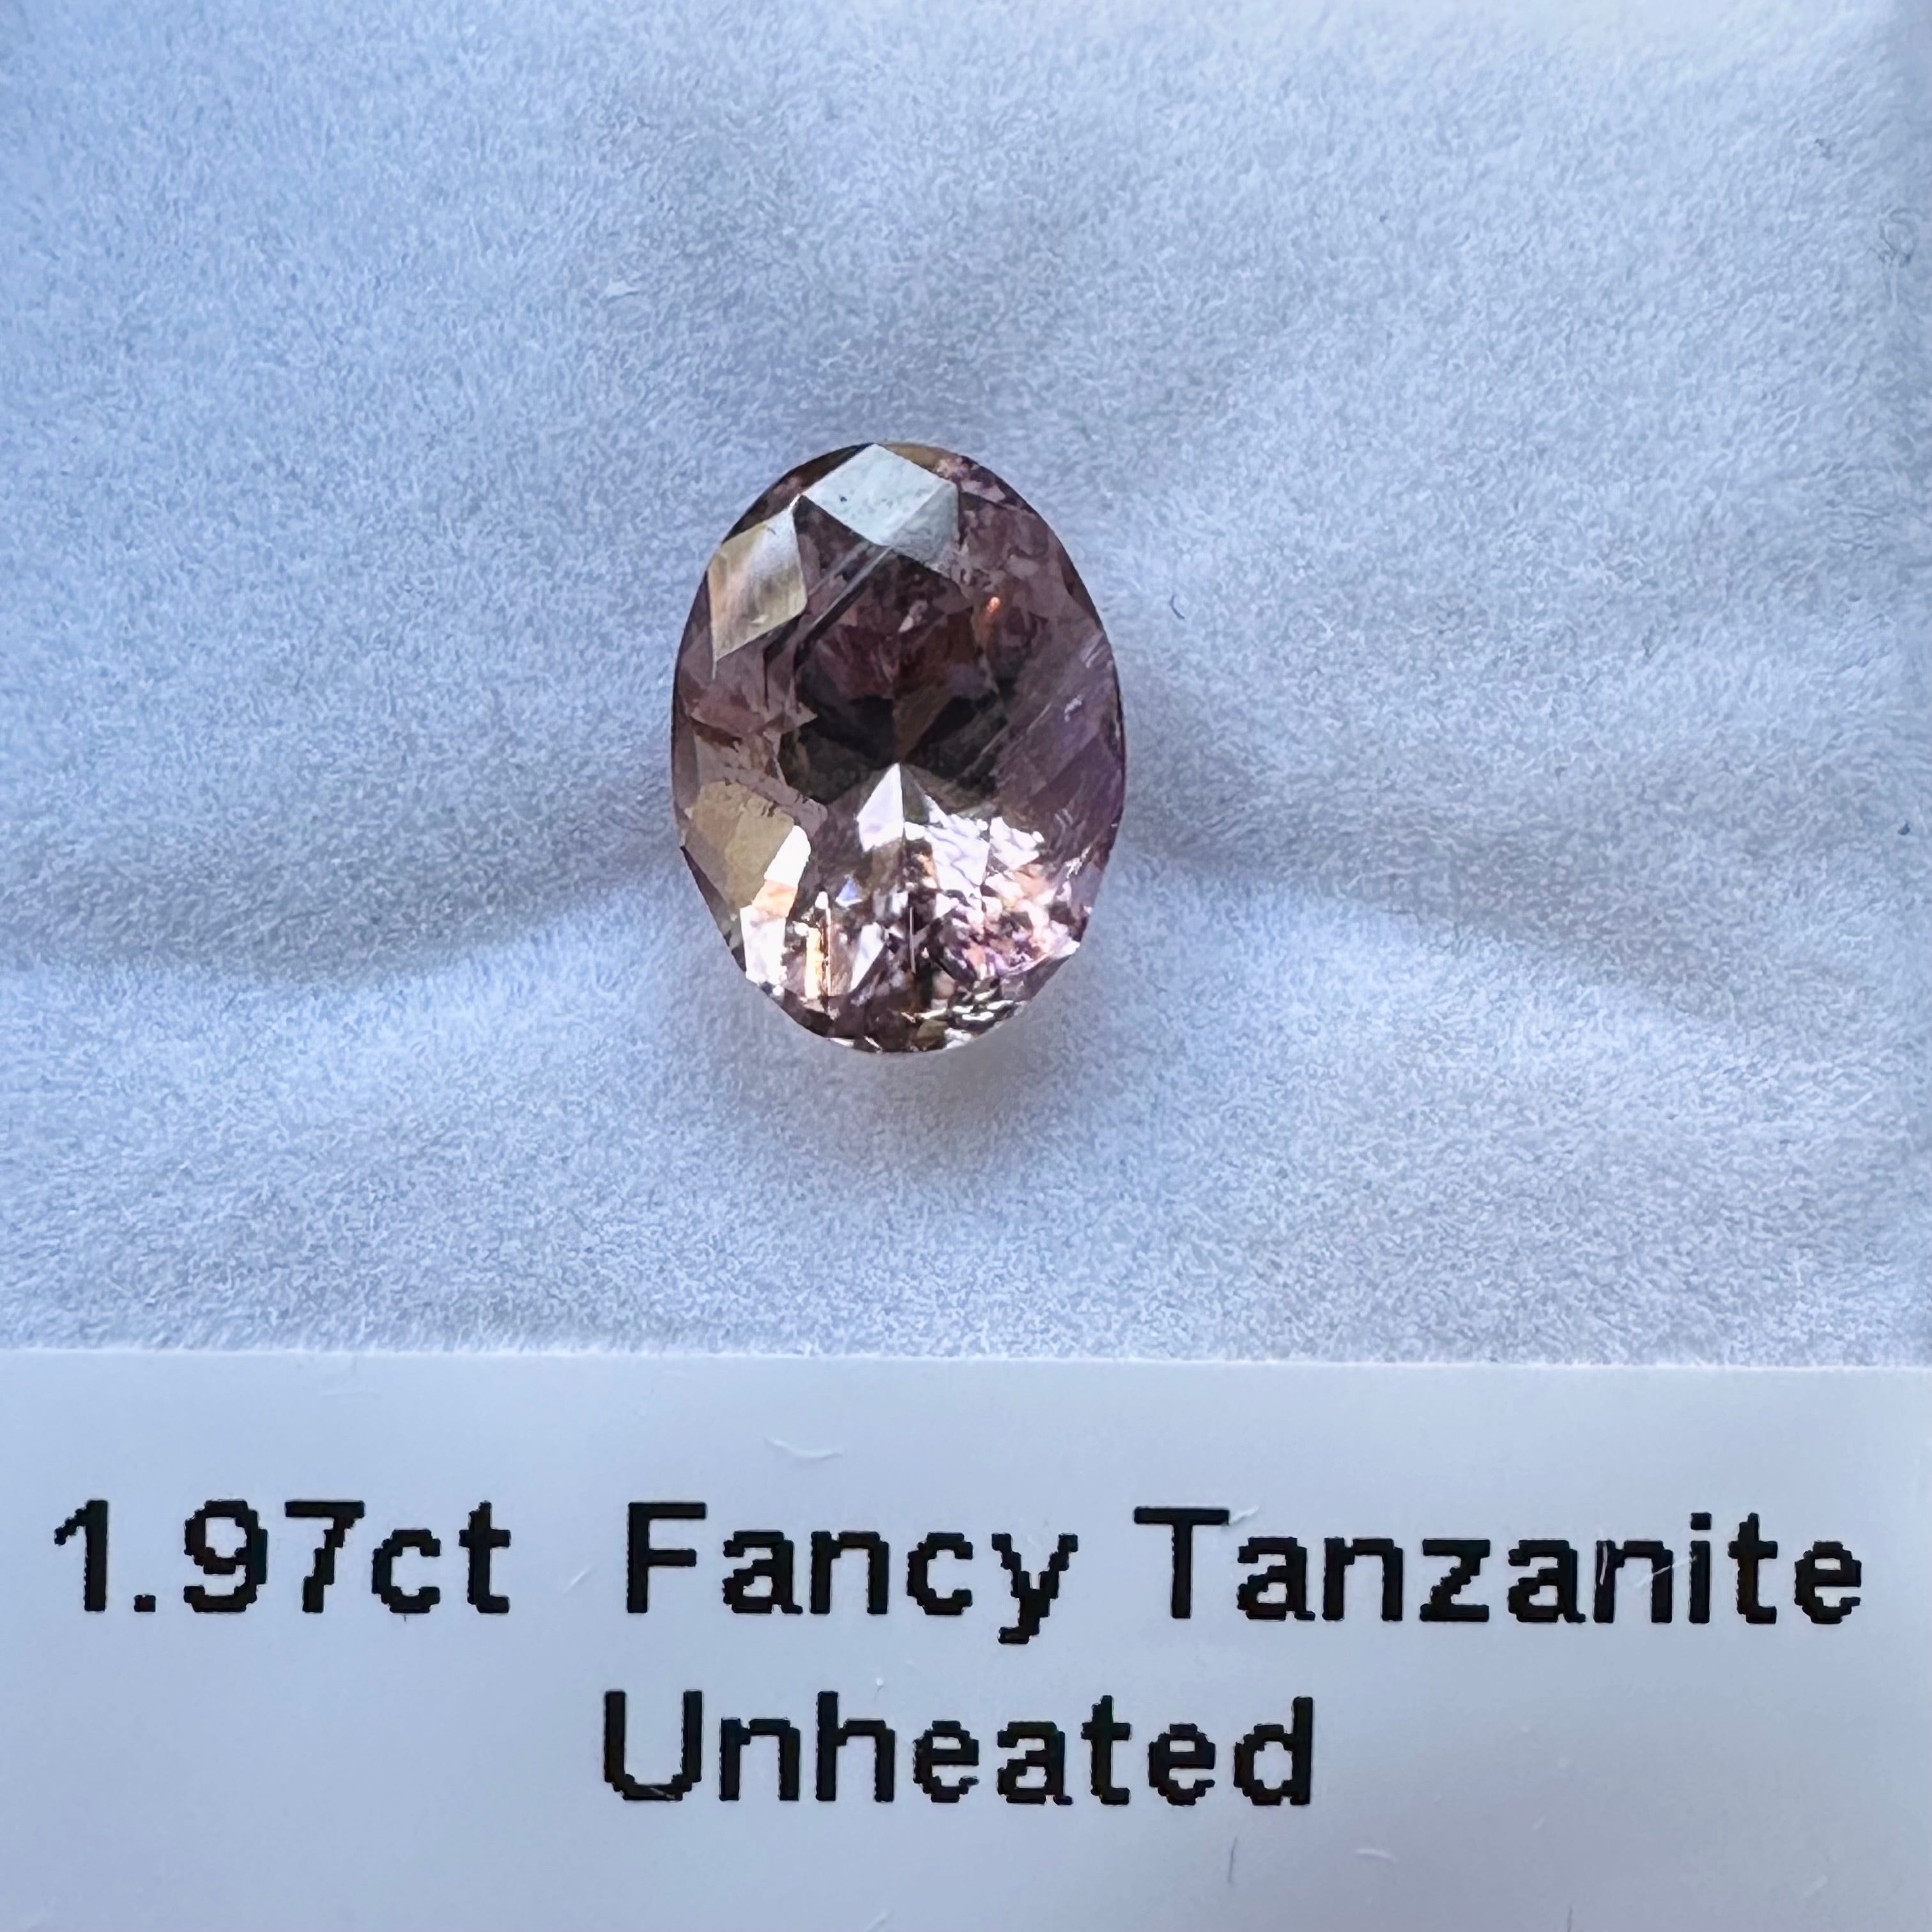 1.97ct Fancy Tanzanite, Tanzania, Untreated Unheated, stone has inclusions inside